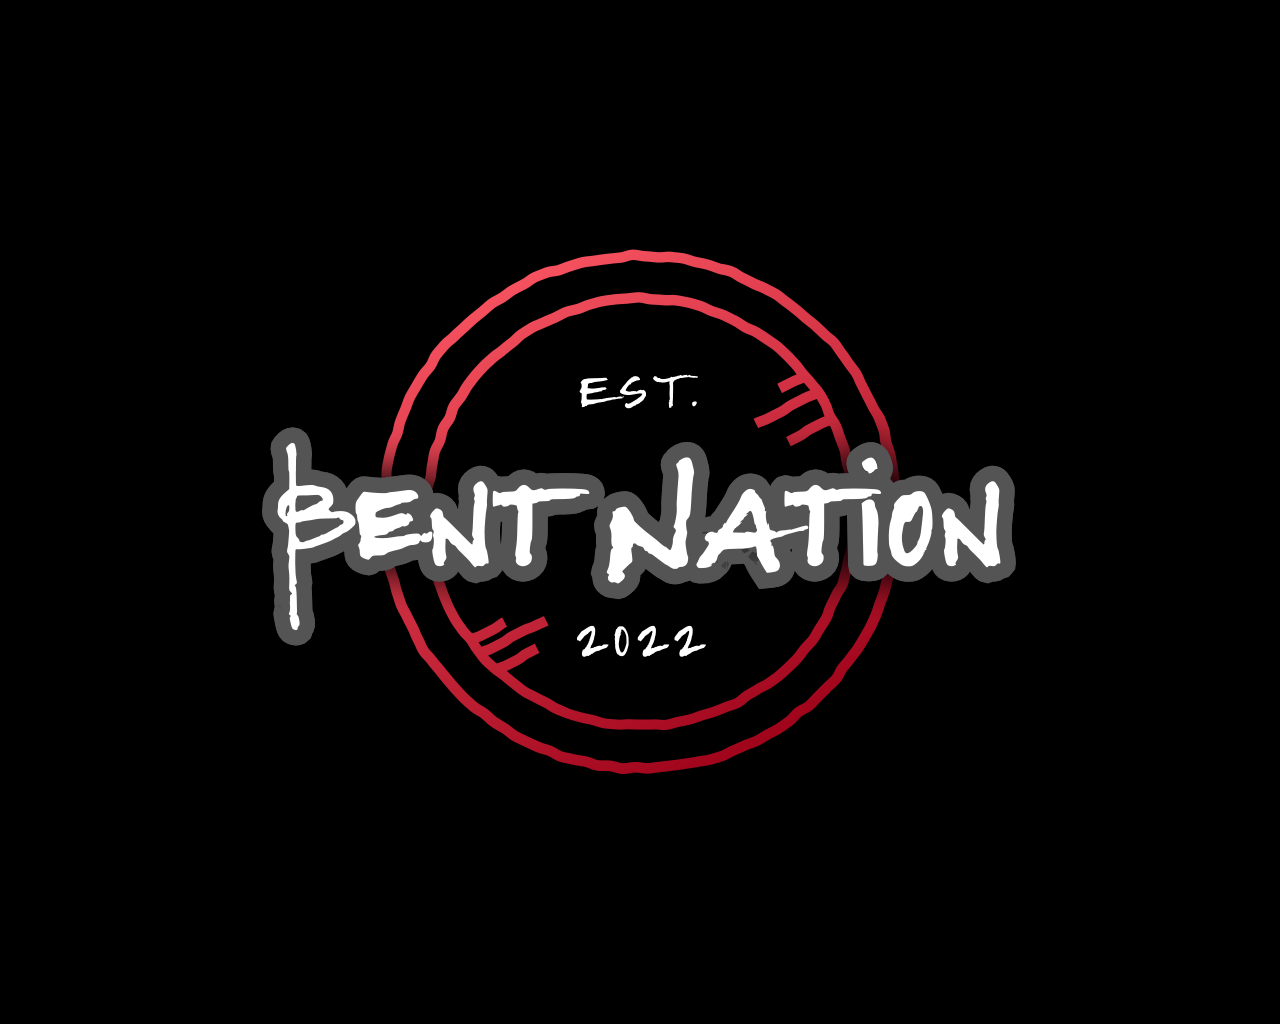 Bent Nation 